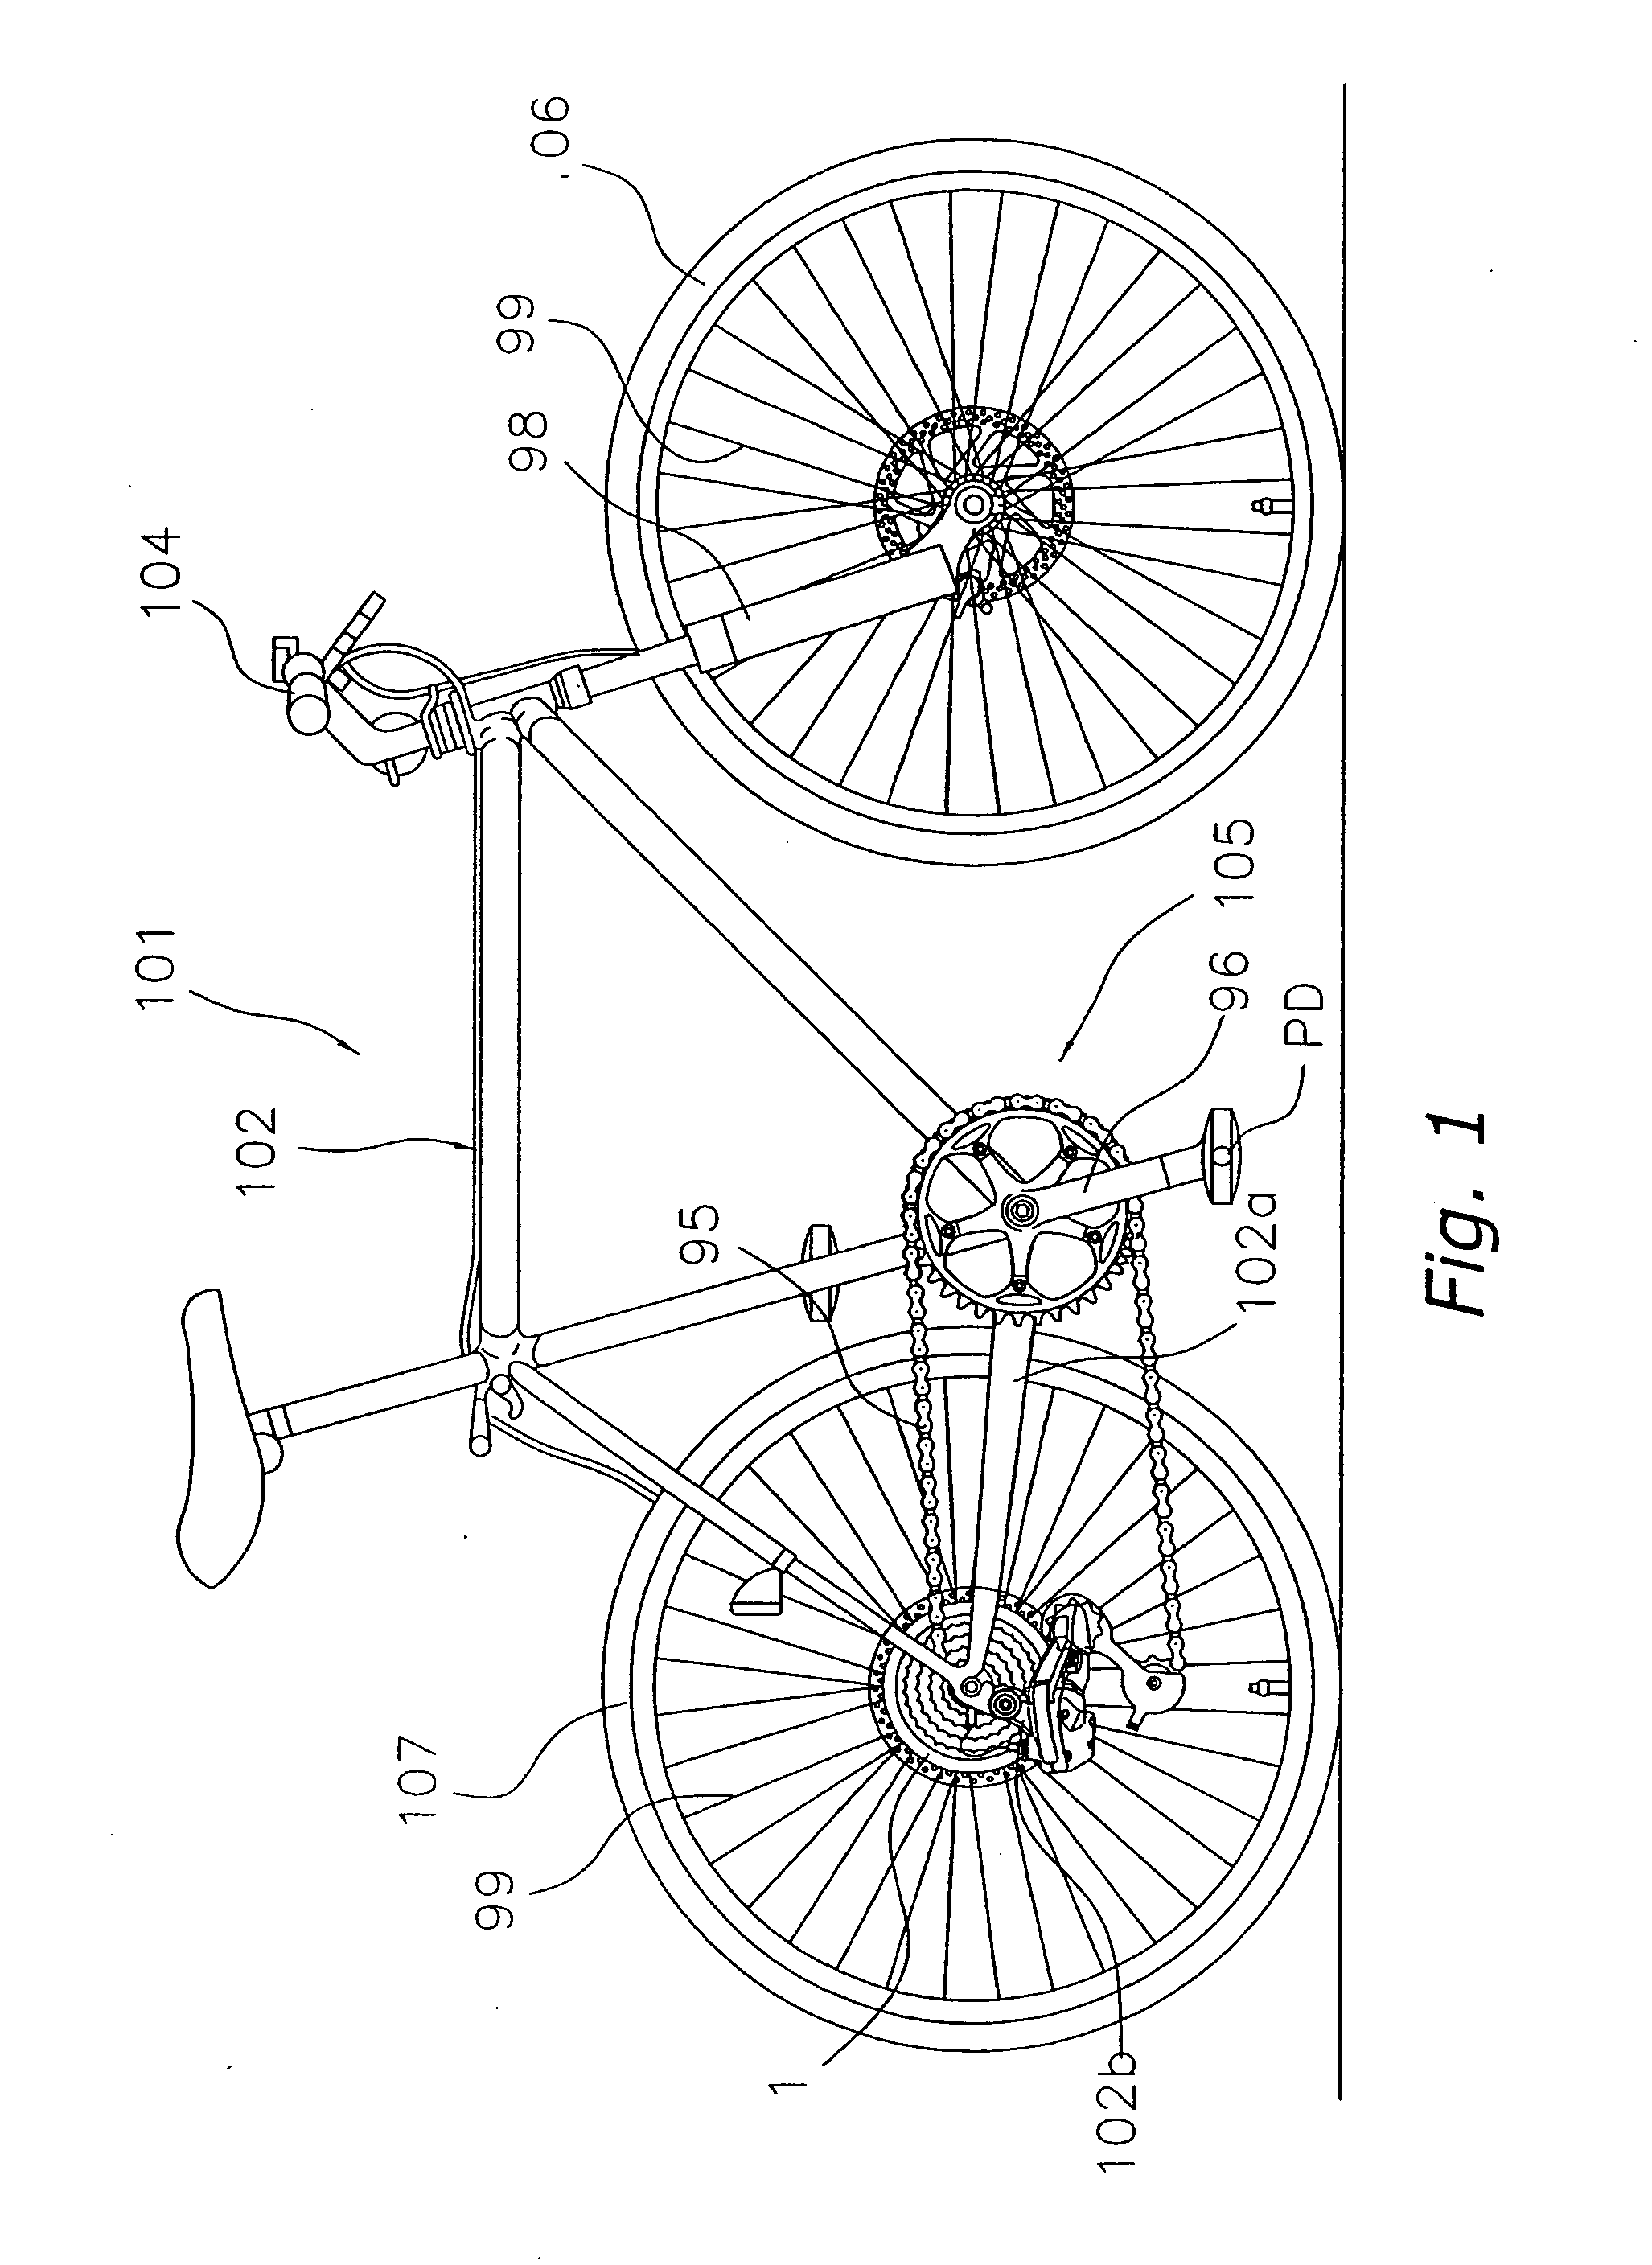 Bicycle electrical generator hub